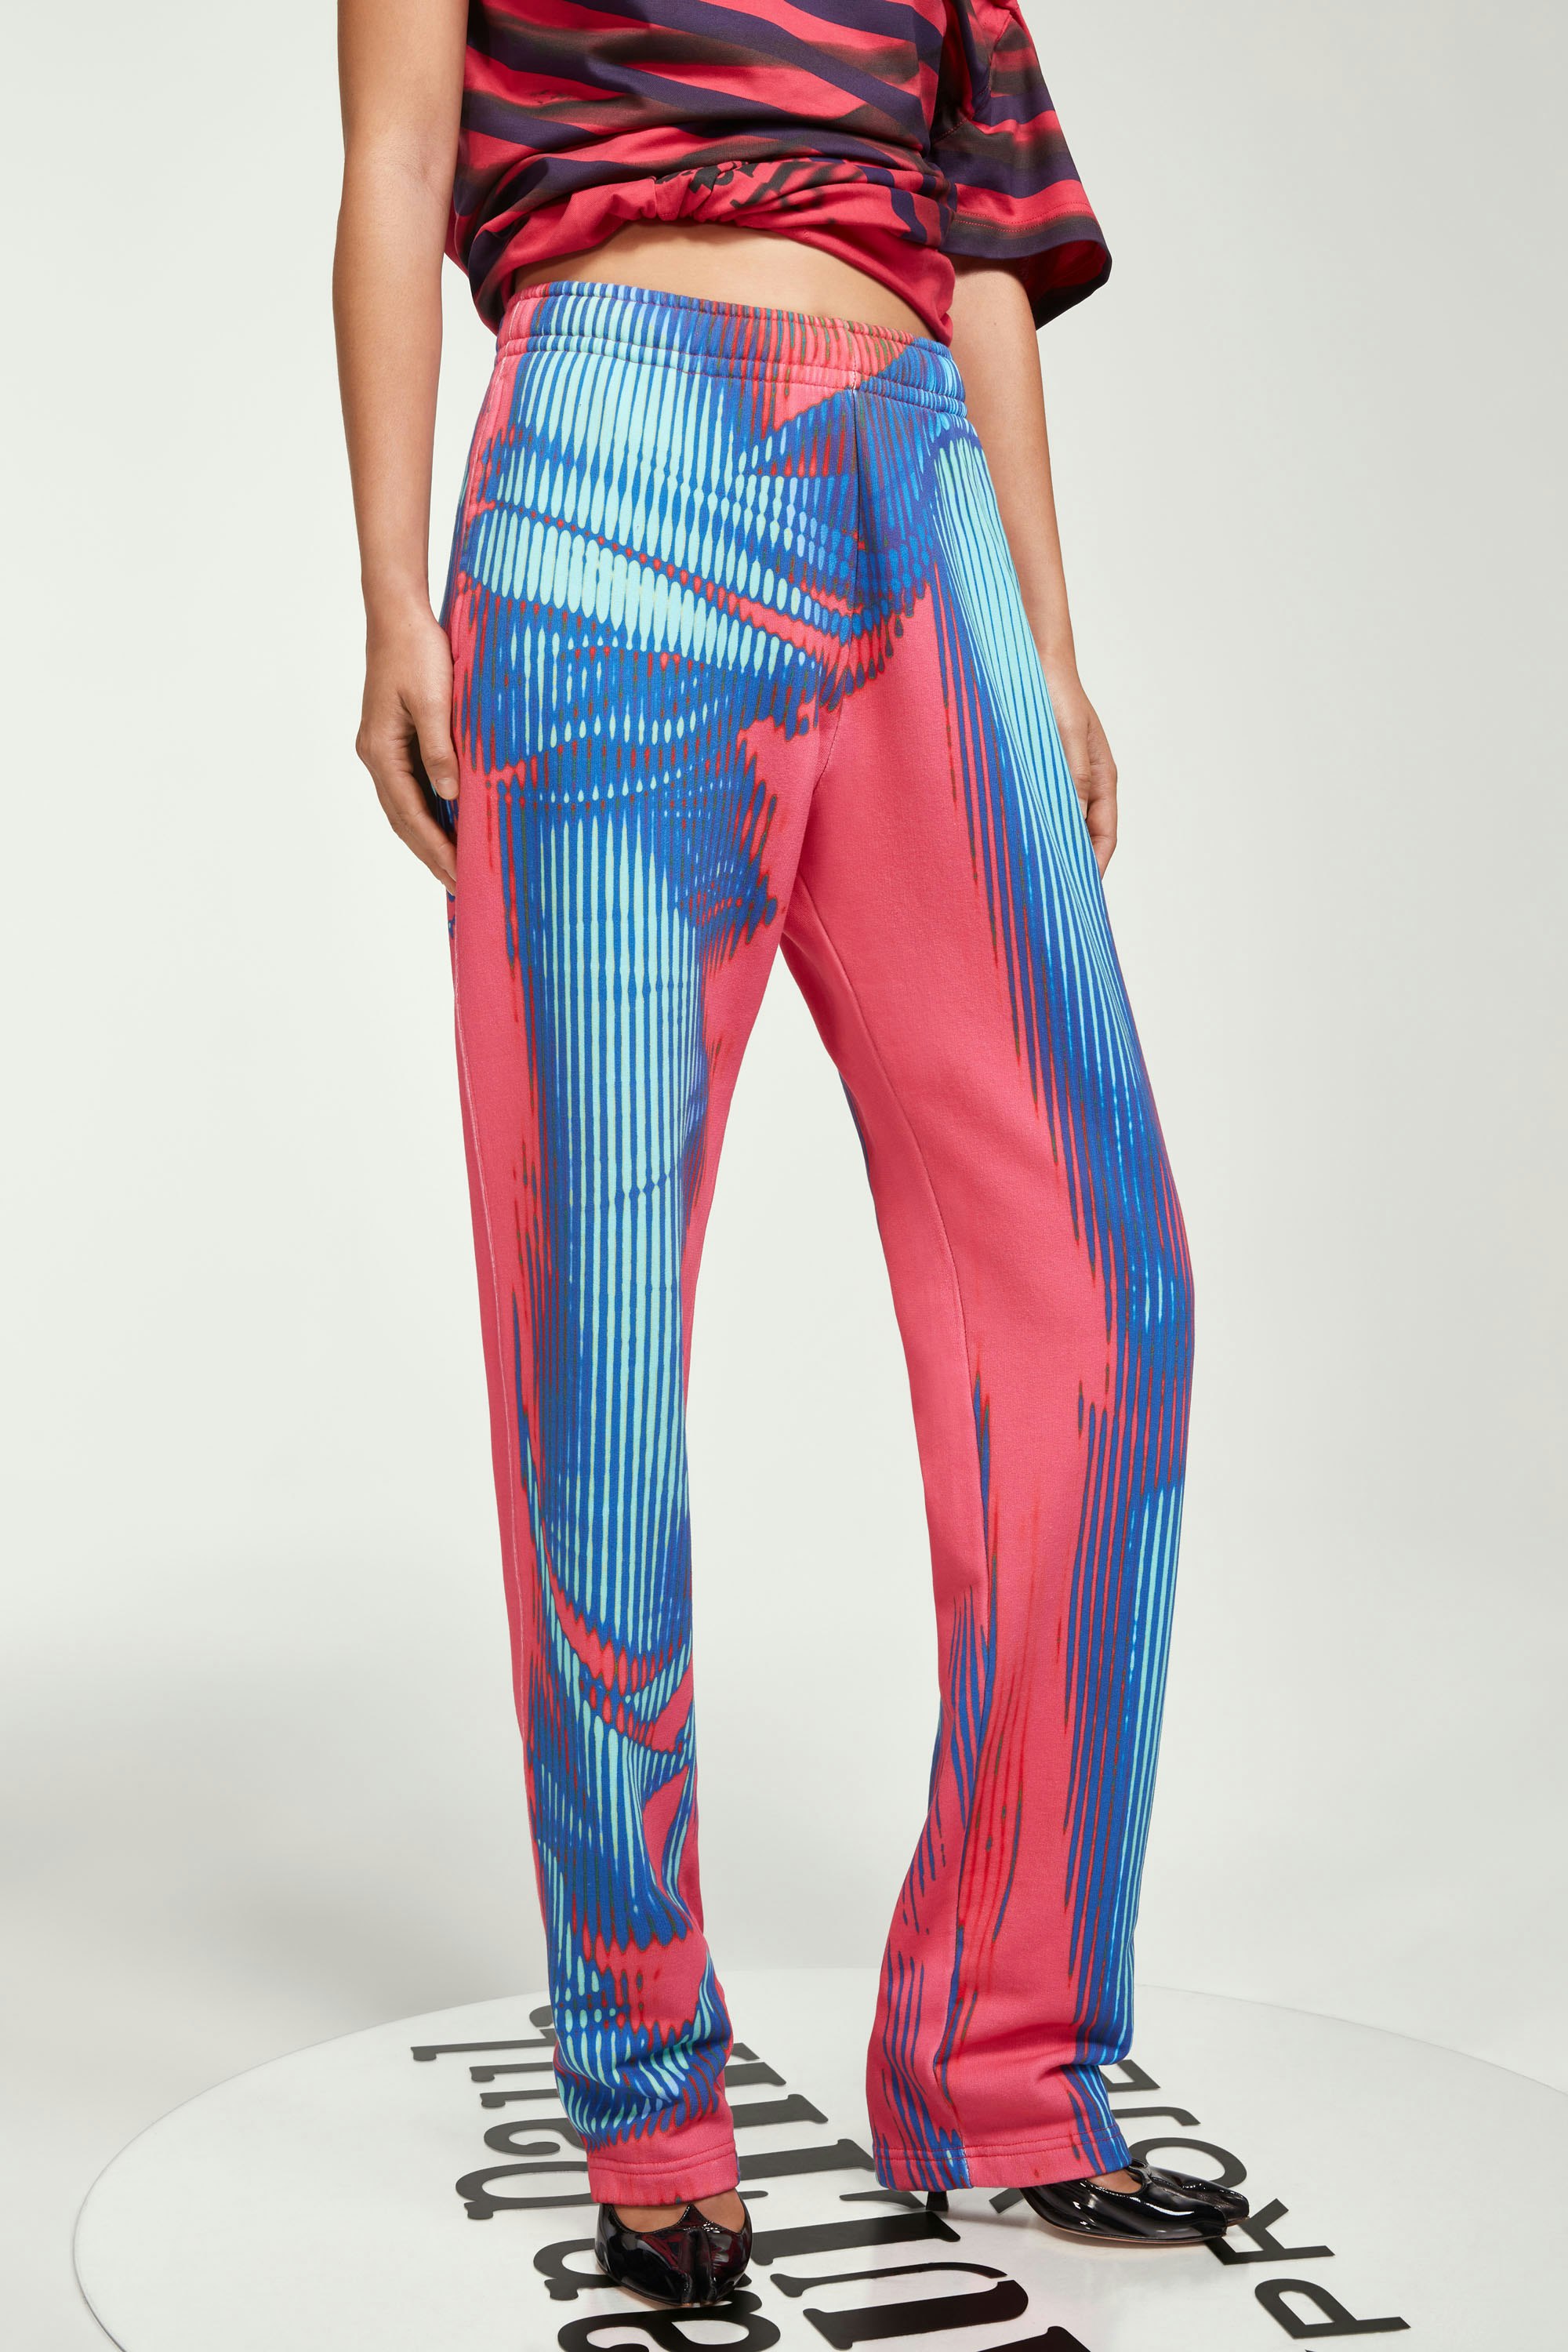 The Pink & Blue Body Morph Sweatpants by Jean Paul Gaultier x Y/Project